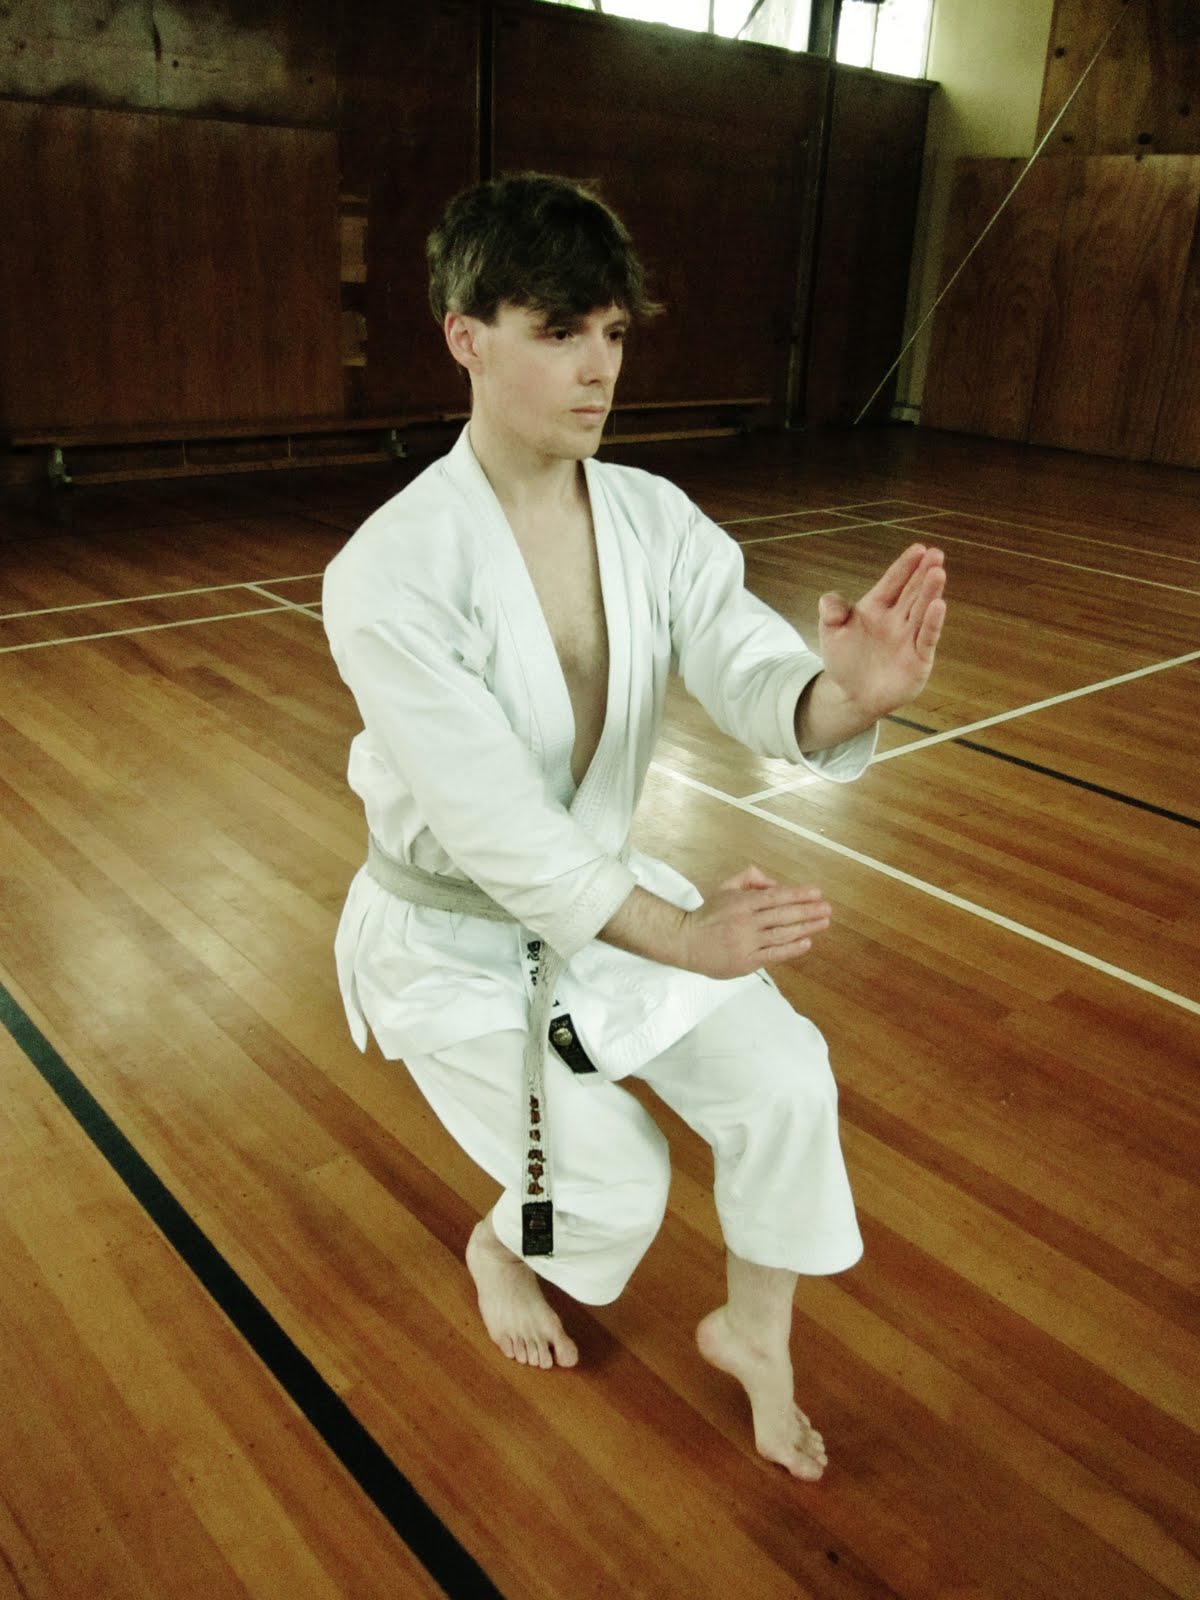 André Bertel's Karate-Do: ANNOUNCEMENT: 精神と技法